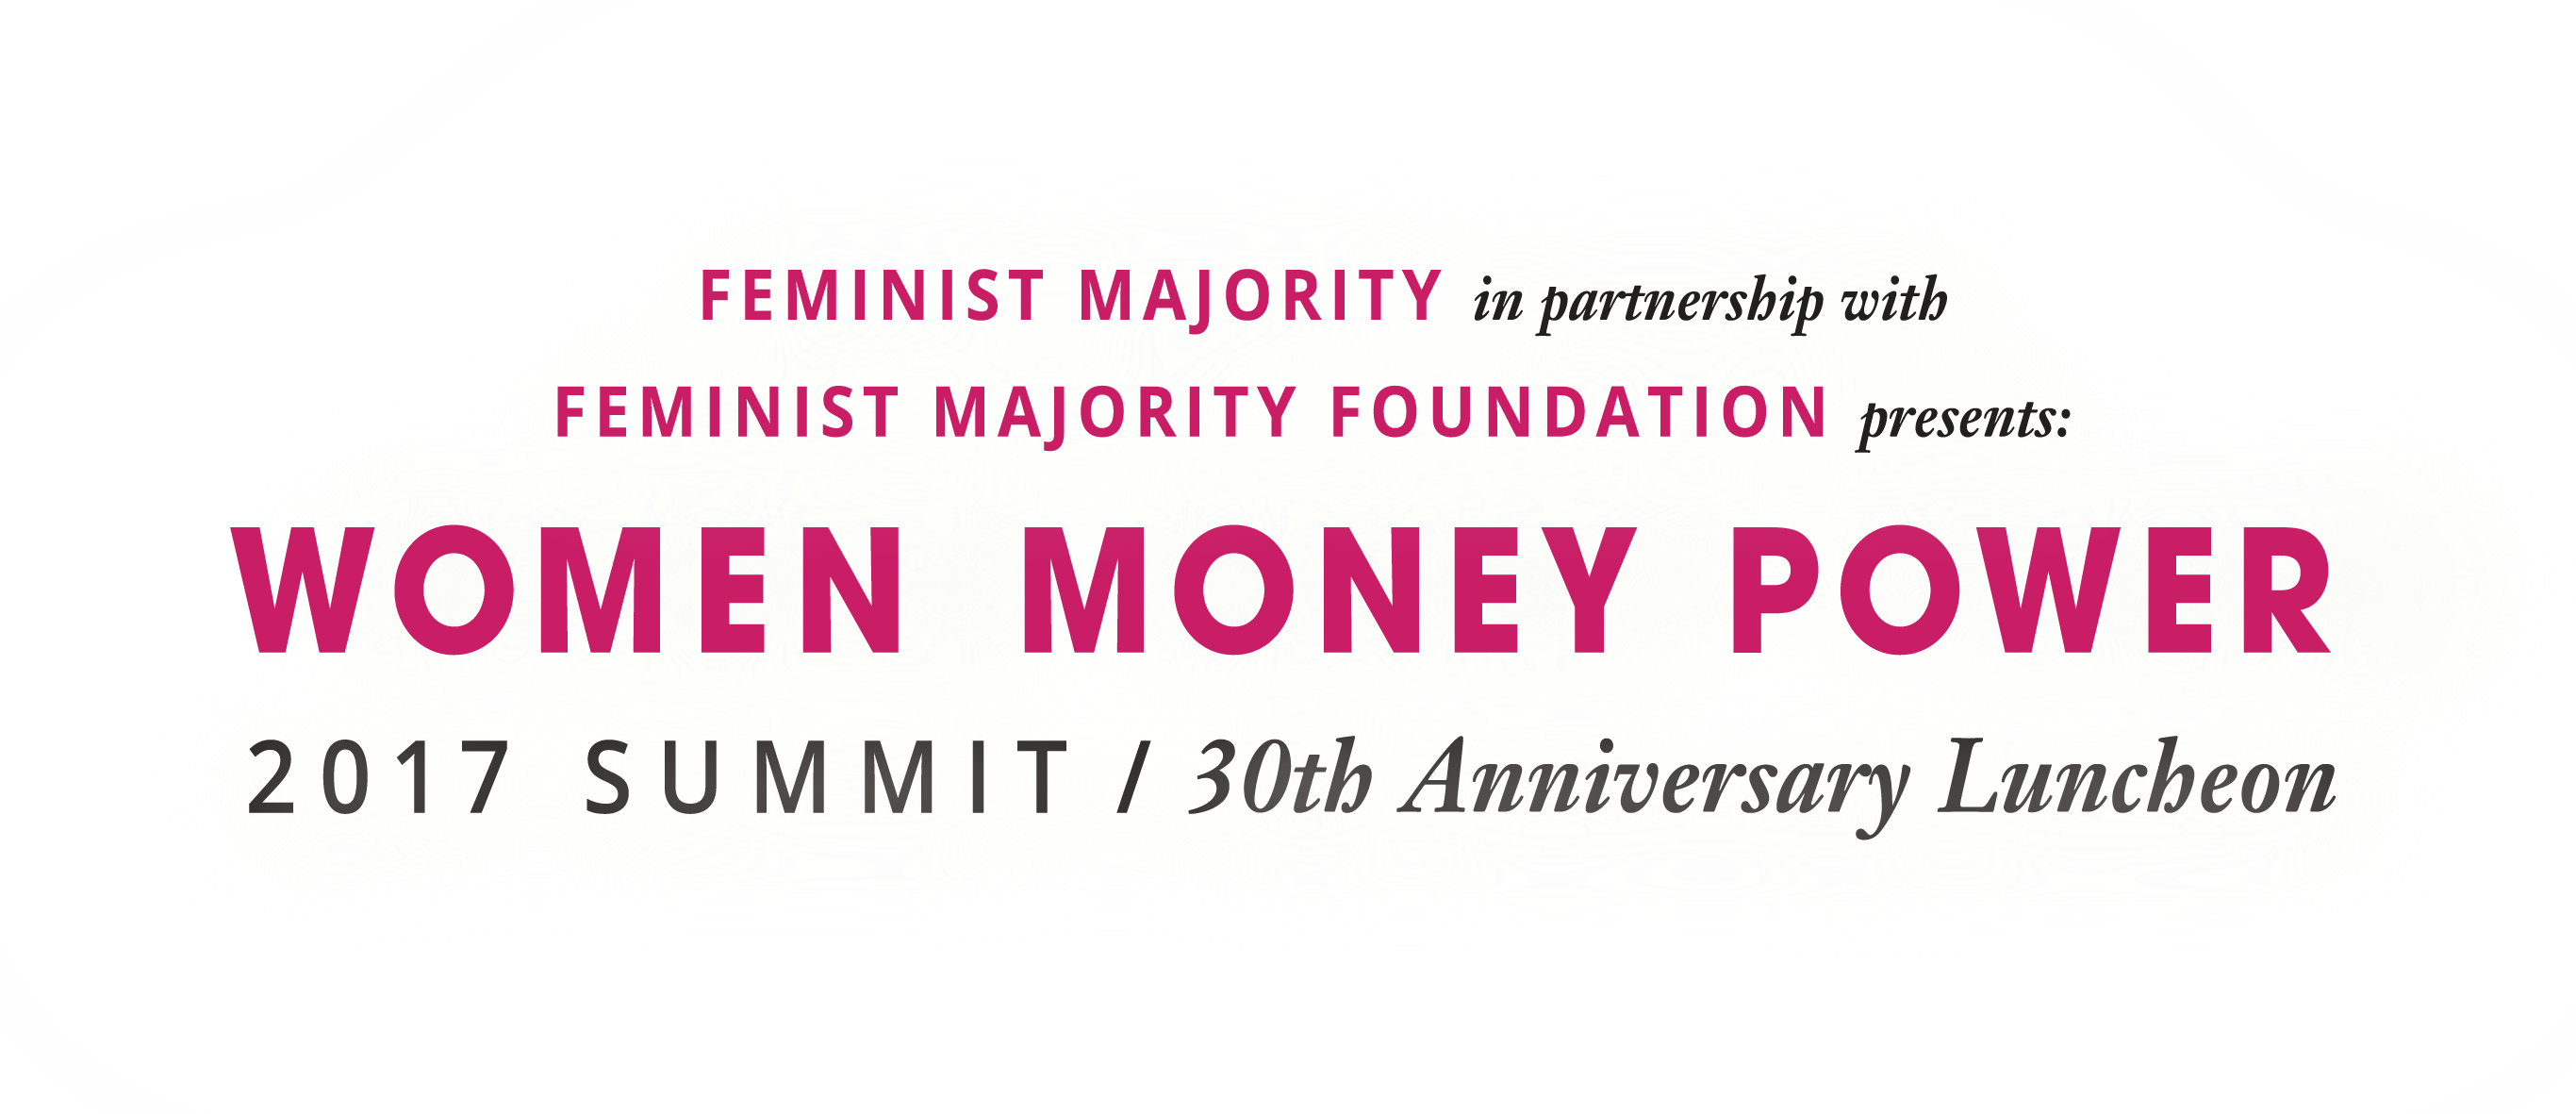 Feminist Majority in partnership with Feminist Majority Foundation presents: Women Money Power 2017 Summit / 30th Anniversary Luncheon